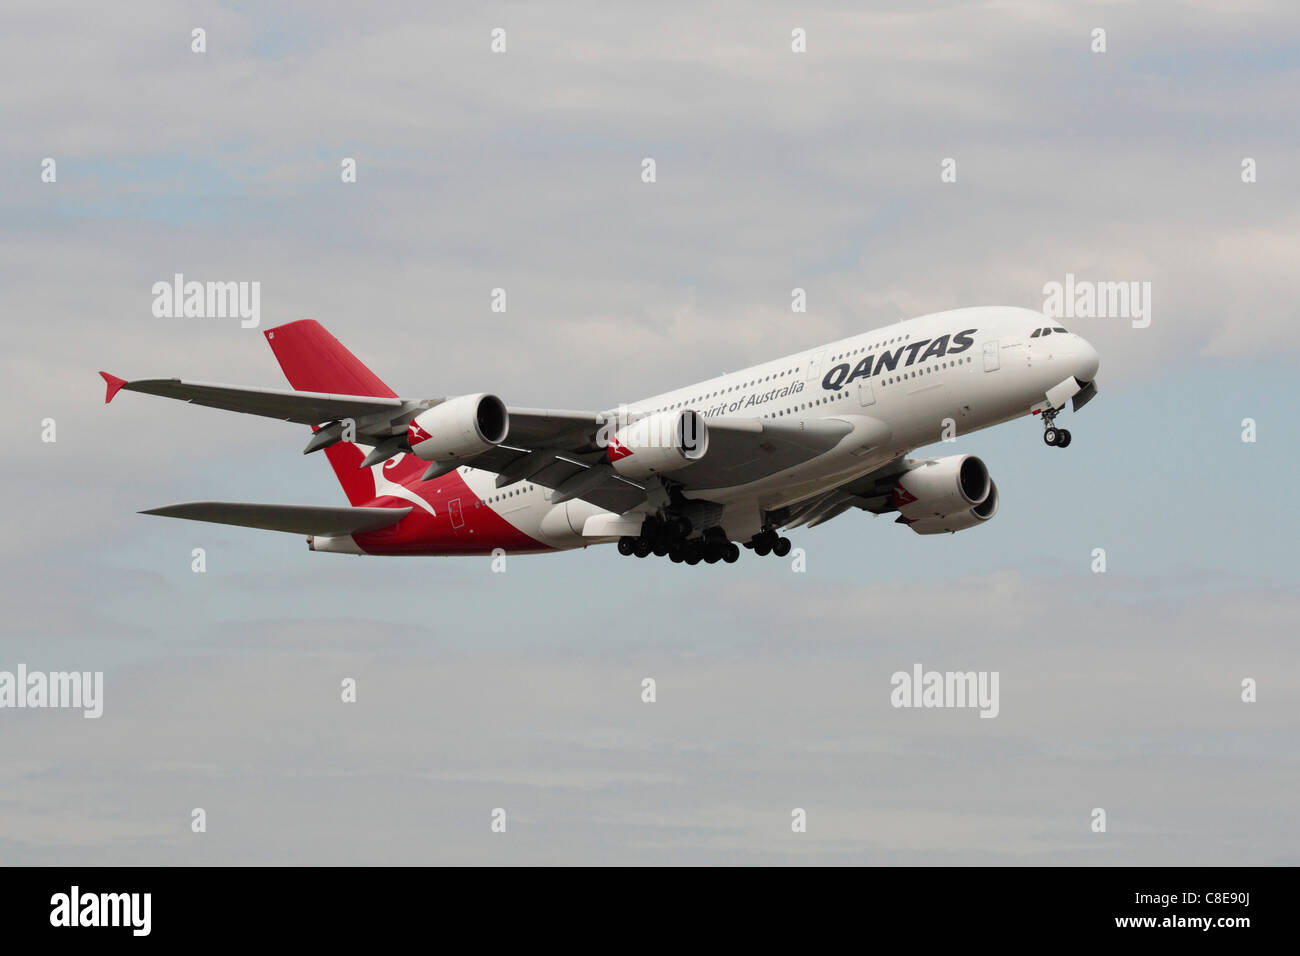 Qantas Airbus A380 superjumbo departing from Heathrow on a long haul intercontinental flight Stock Photo